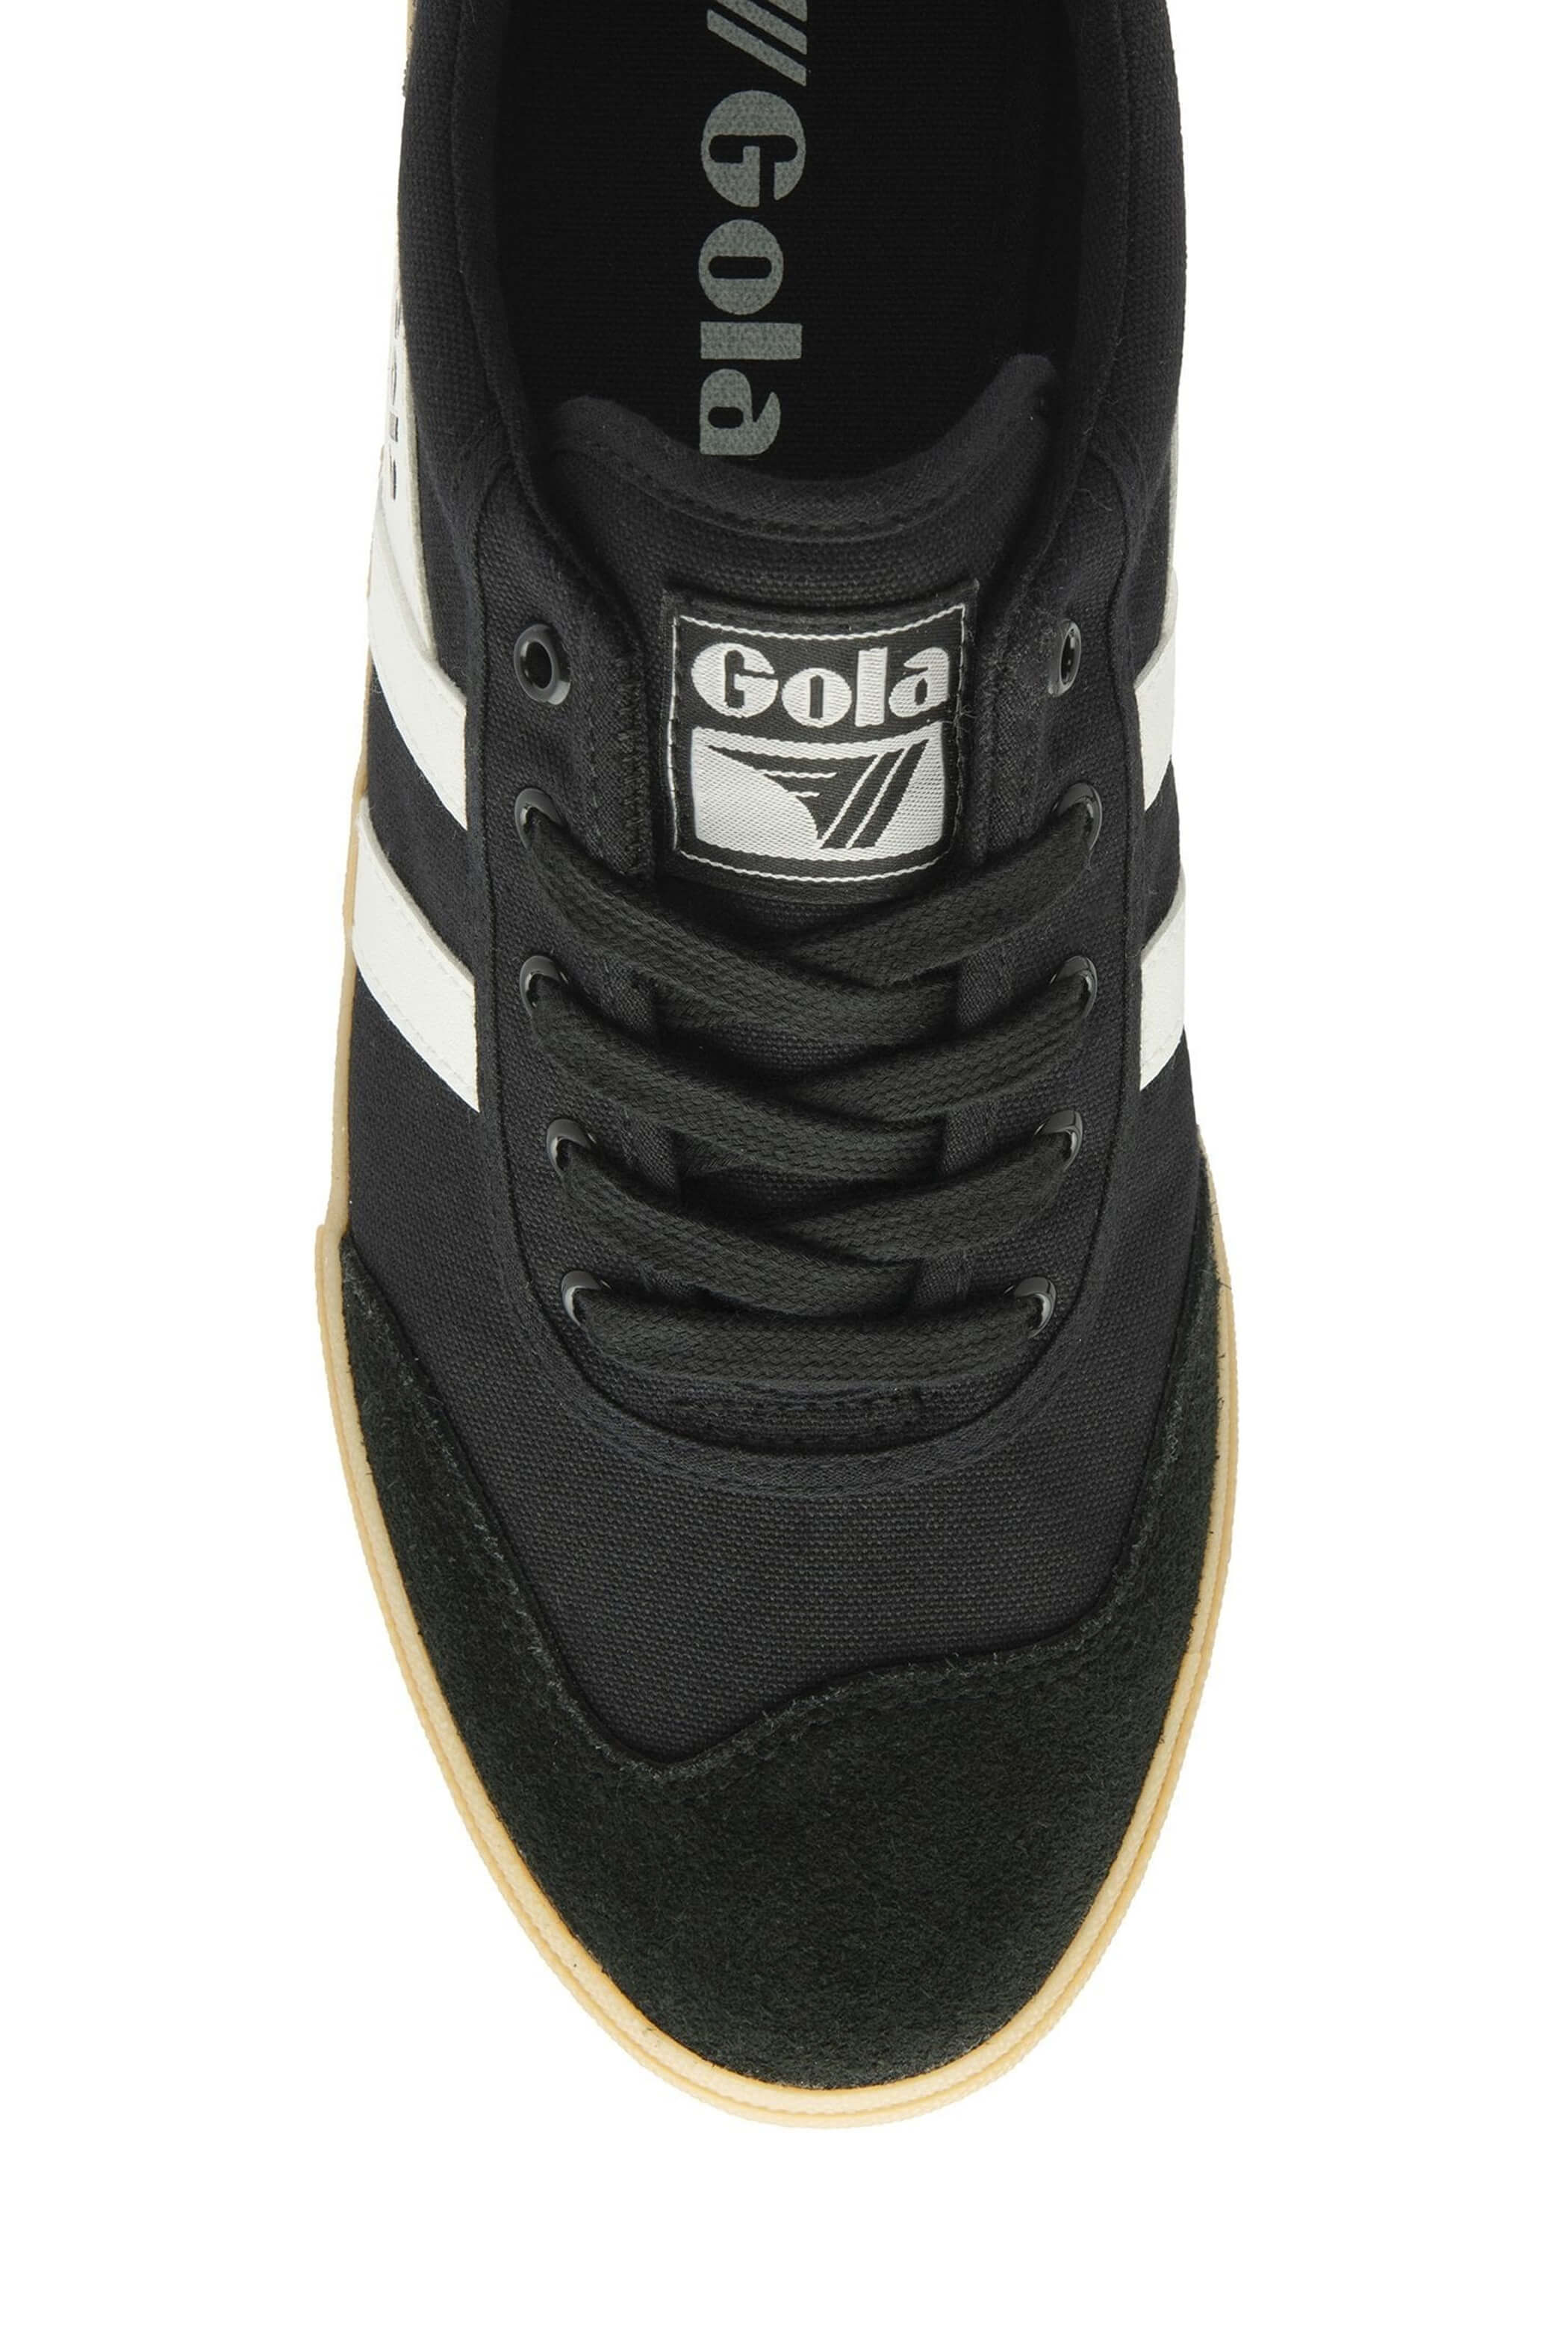 Gola badminton shoe in black off white and gum